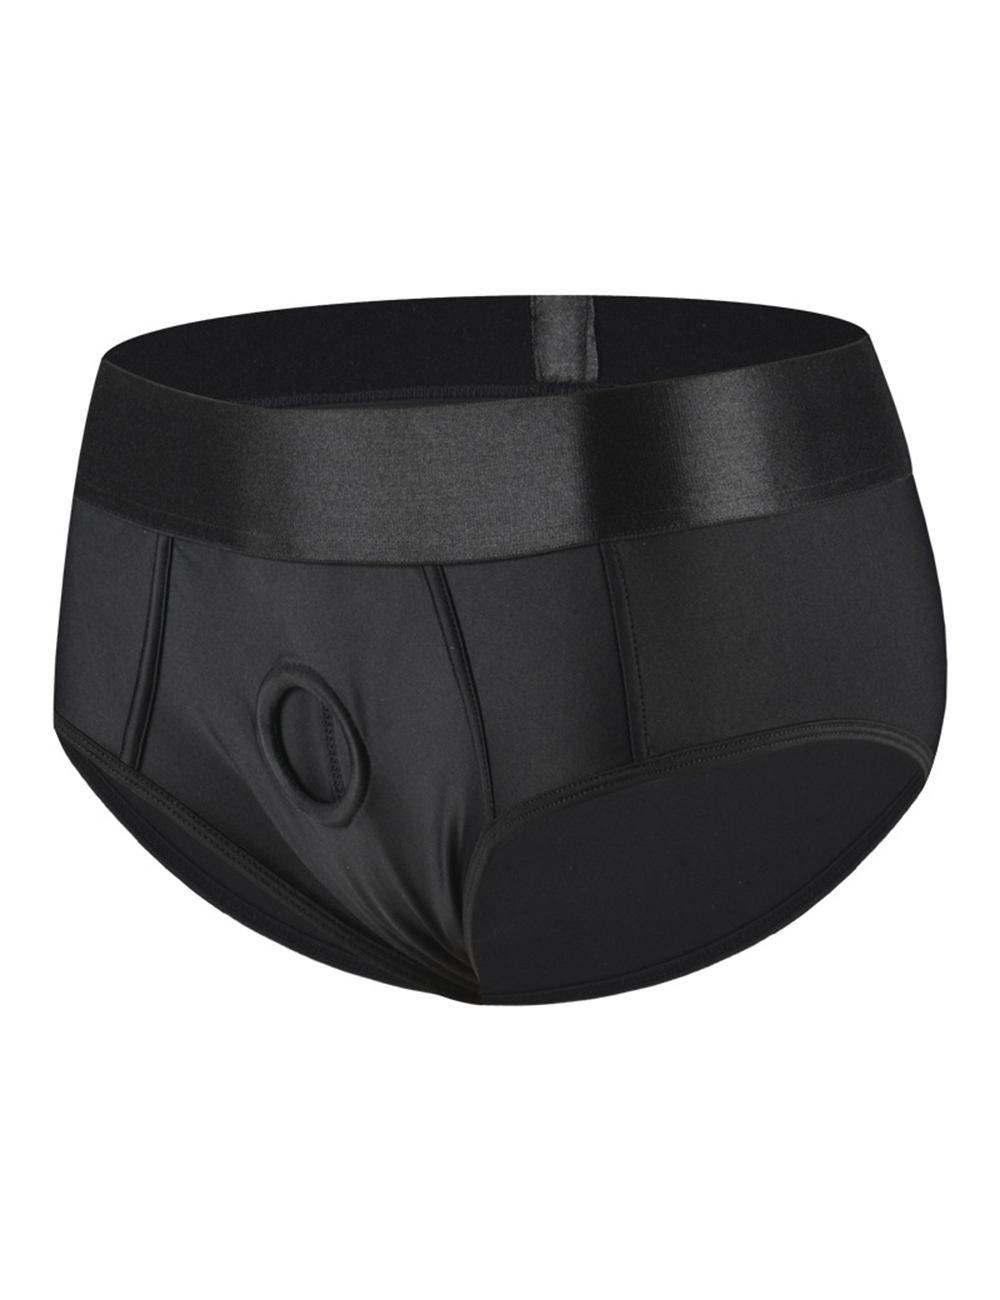 Black Strap-on Harness Dildo Wearable Panty